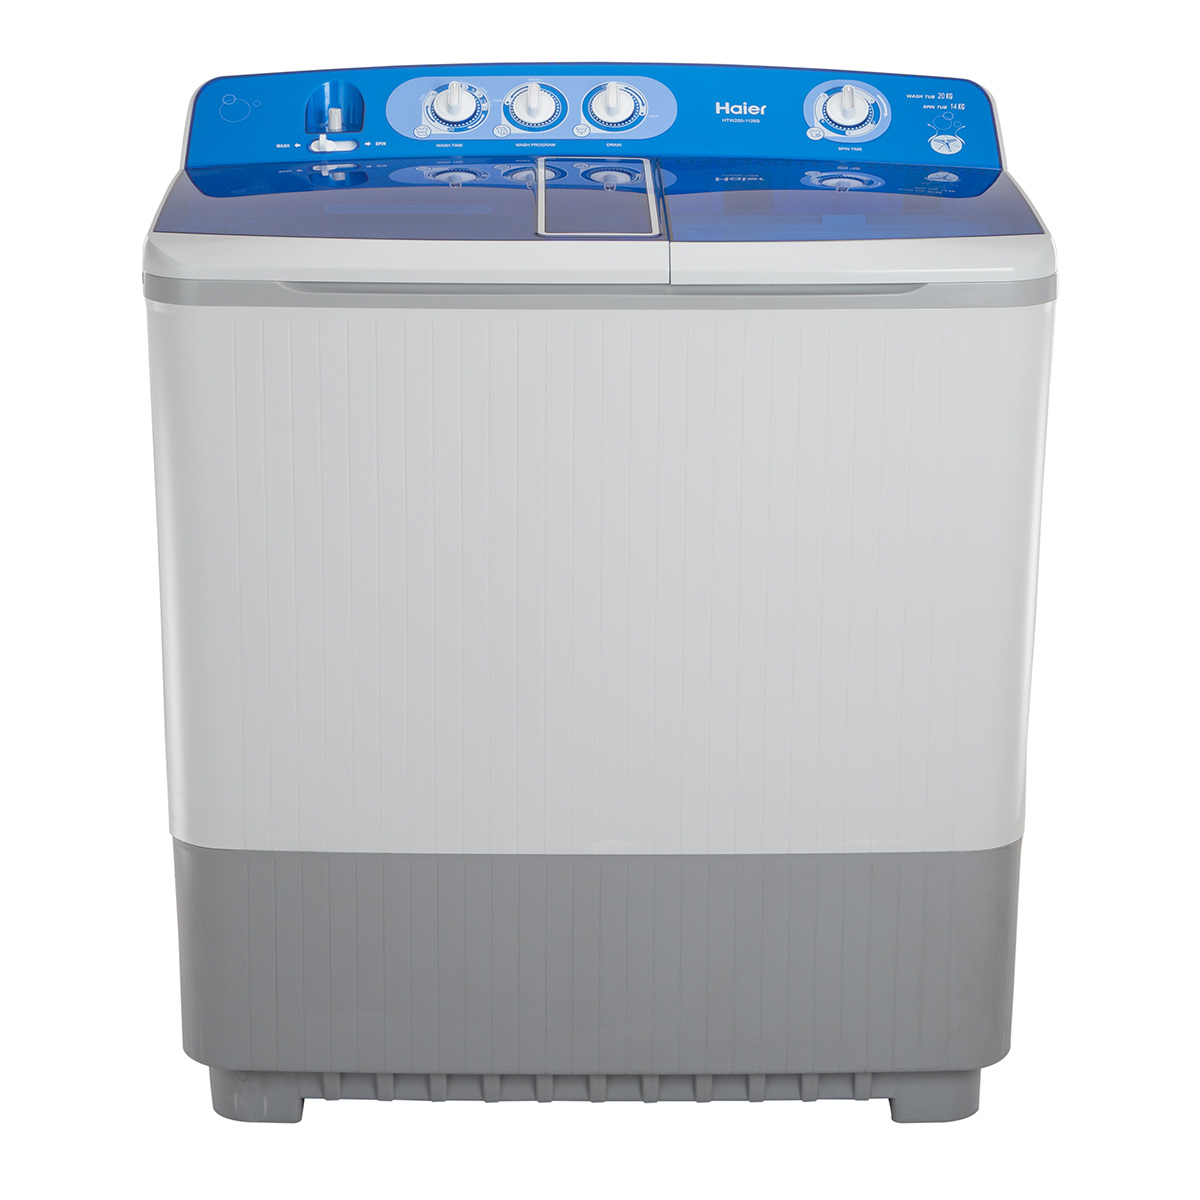 Haier Semi-Automatic Washing Machine Models